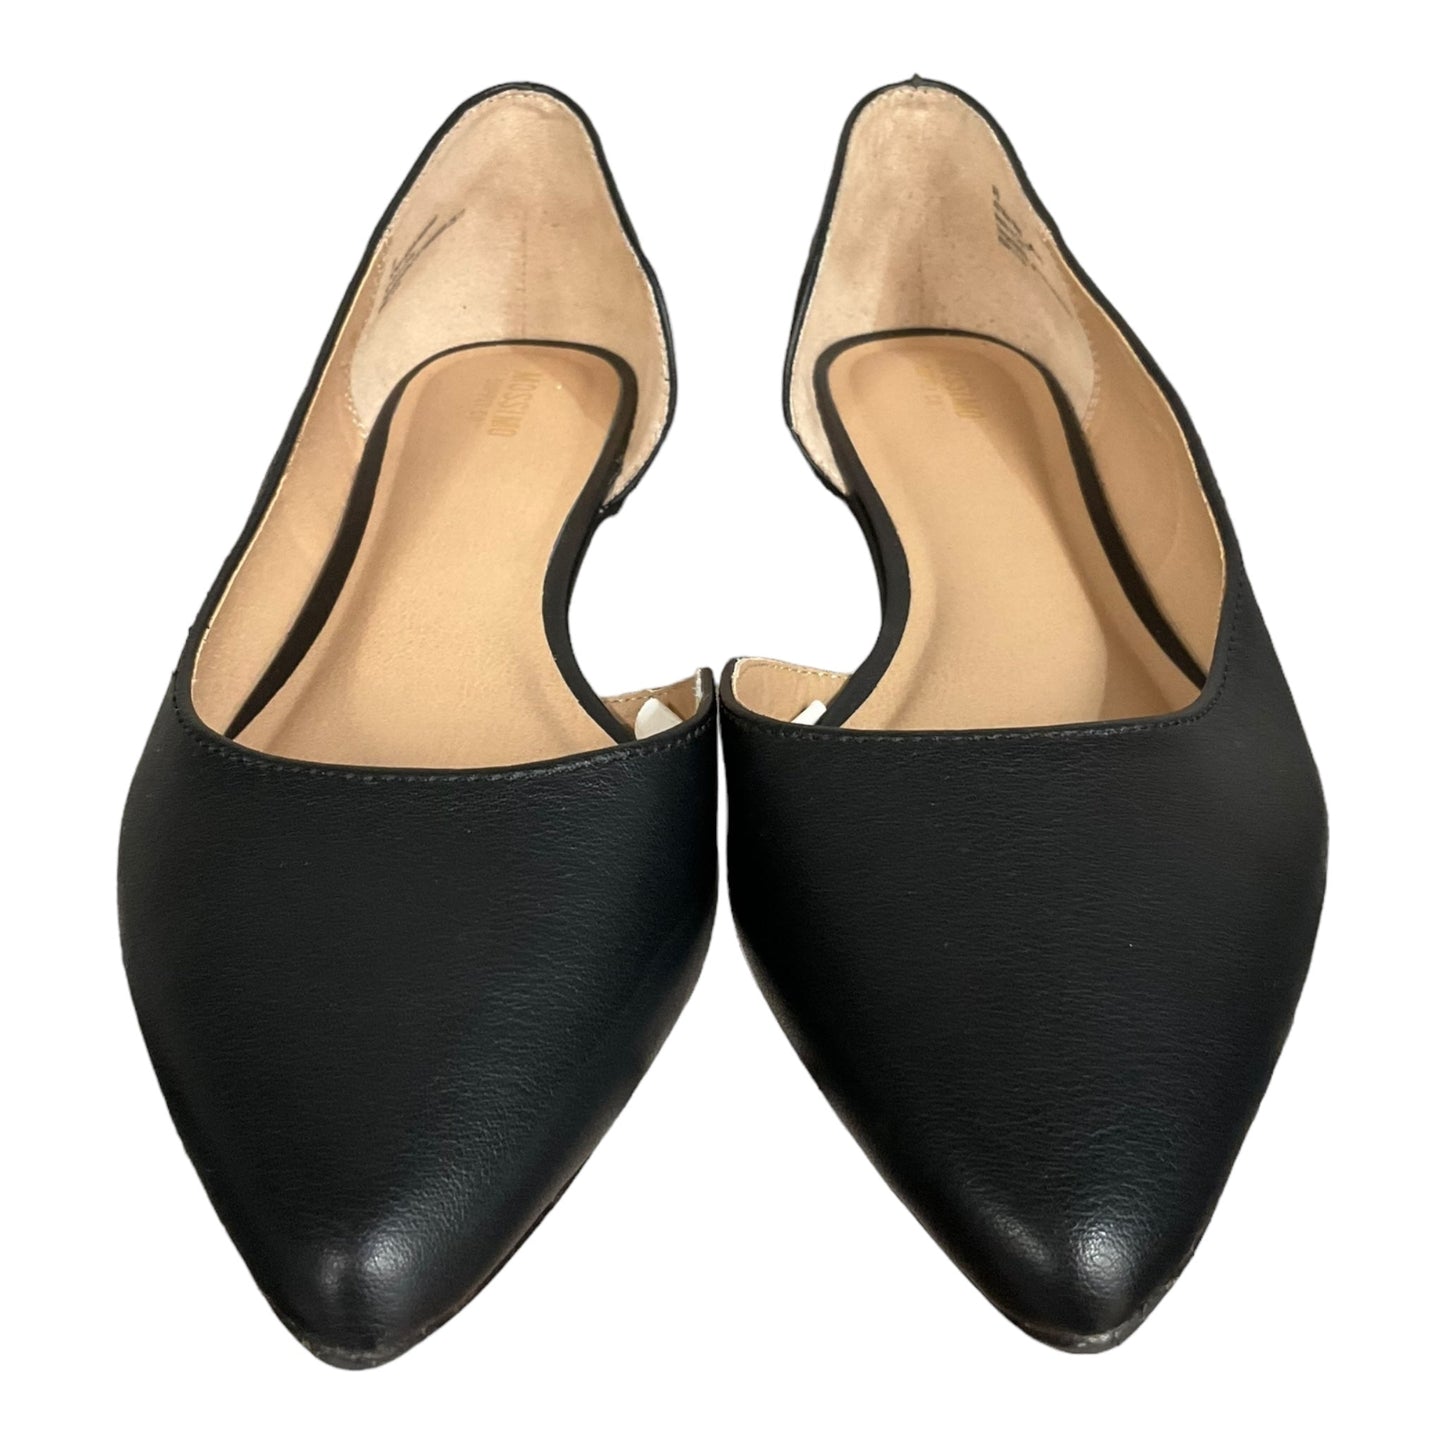 Black Shoes Flats Mossimo, Size 8.5